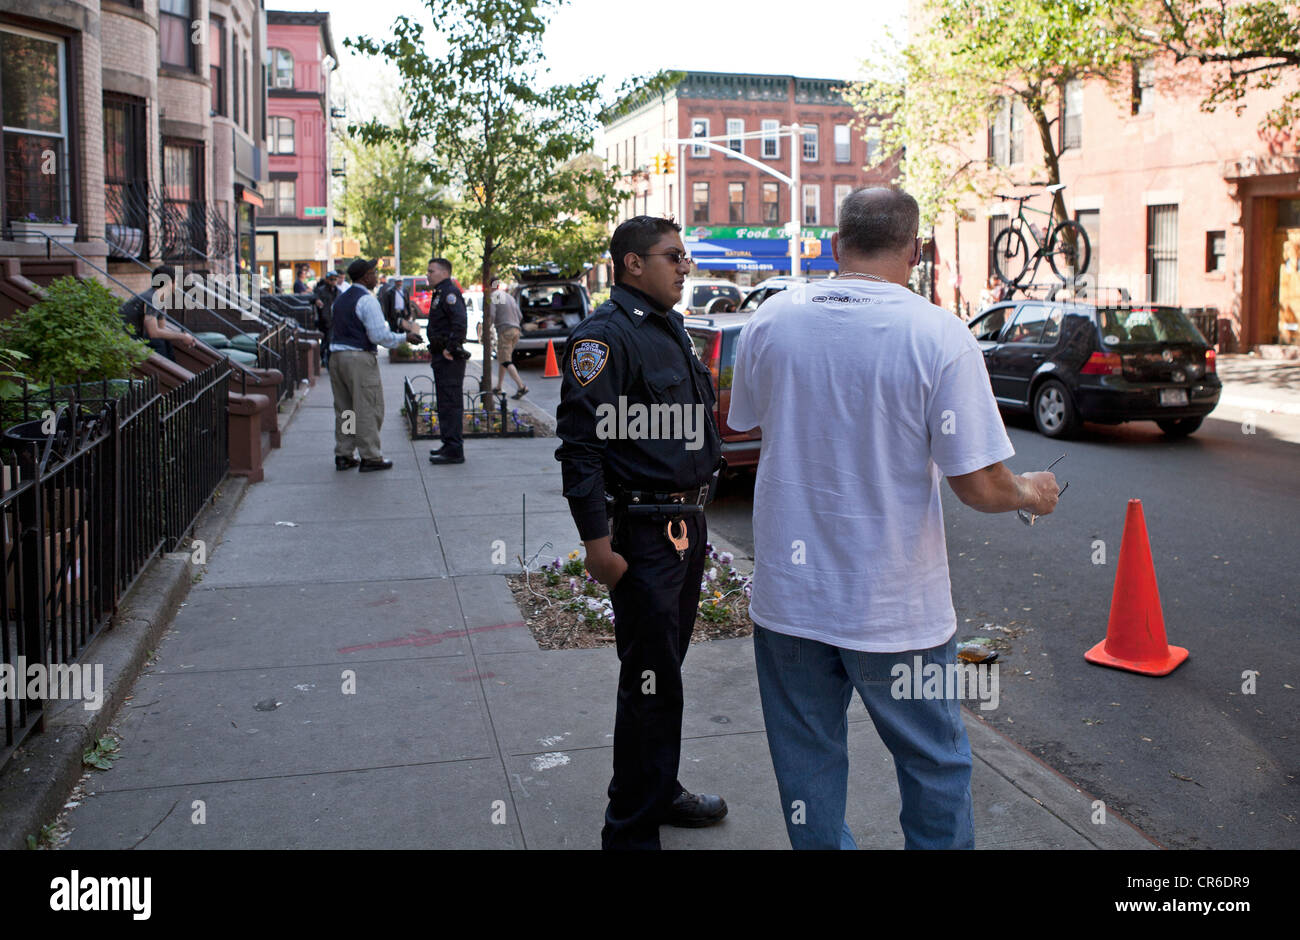 Police in New York City investigate an altercation involving 2 men. Stock Photo